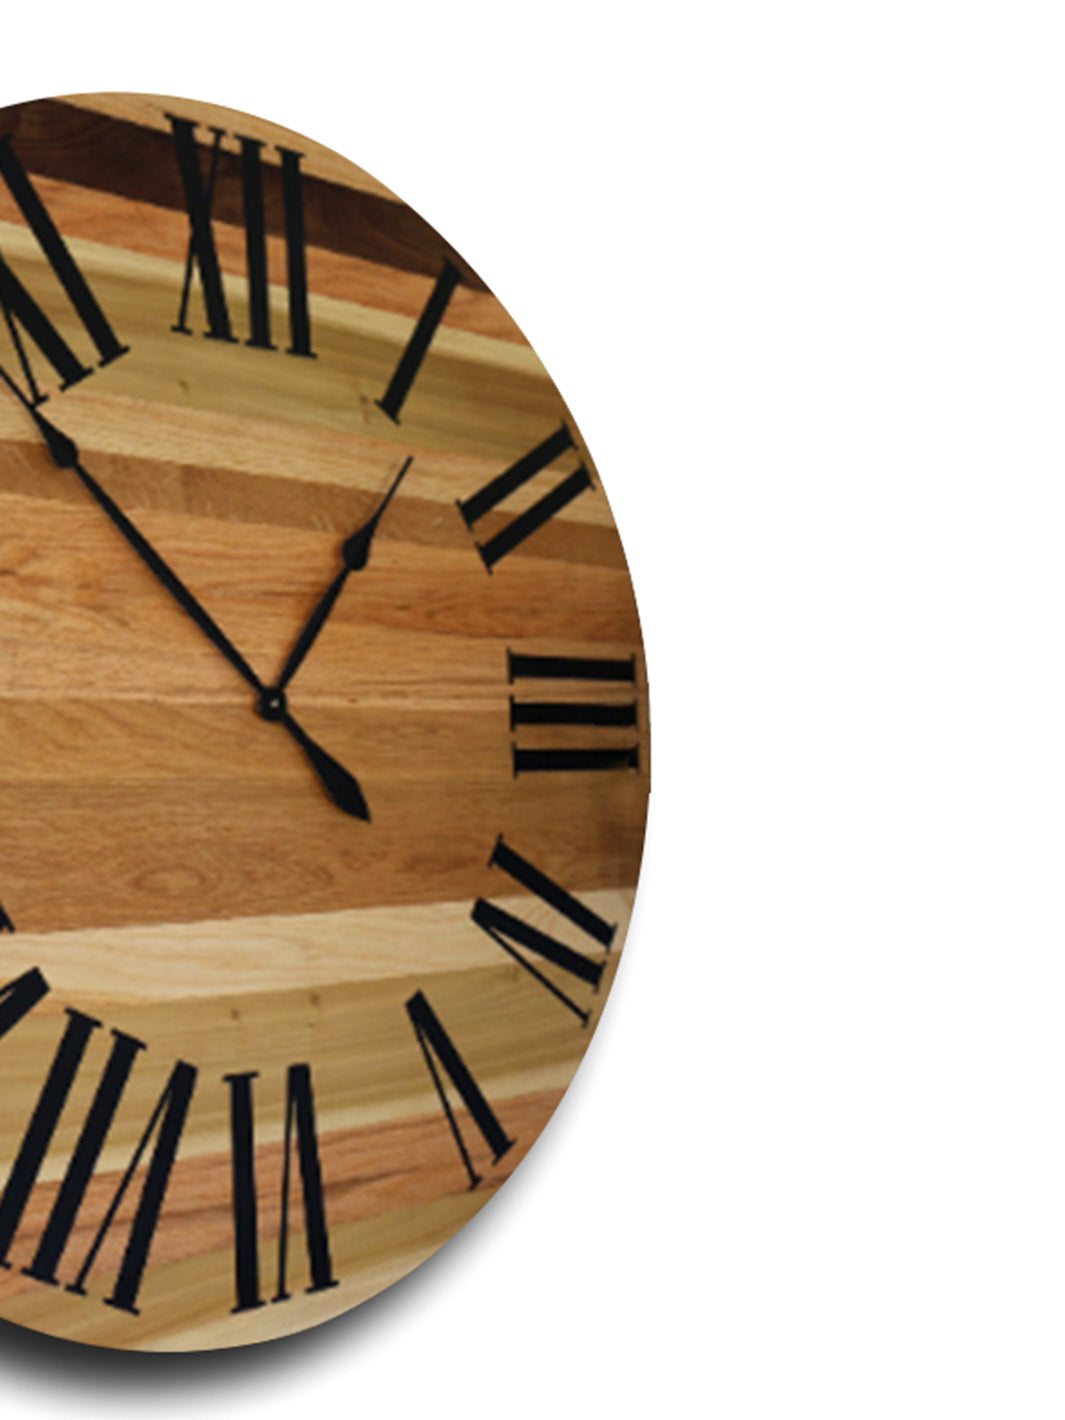 Mixed Salvaged 42" Hardwood Wall Clock (in stock)